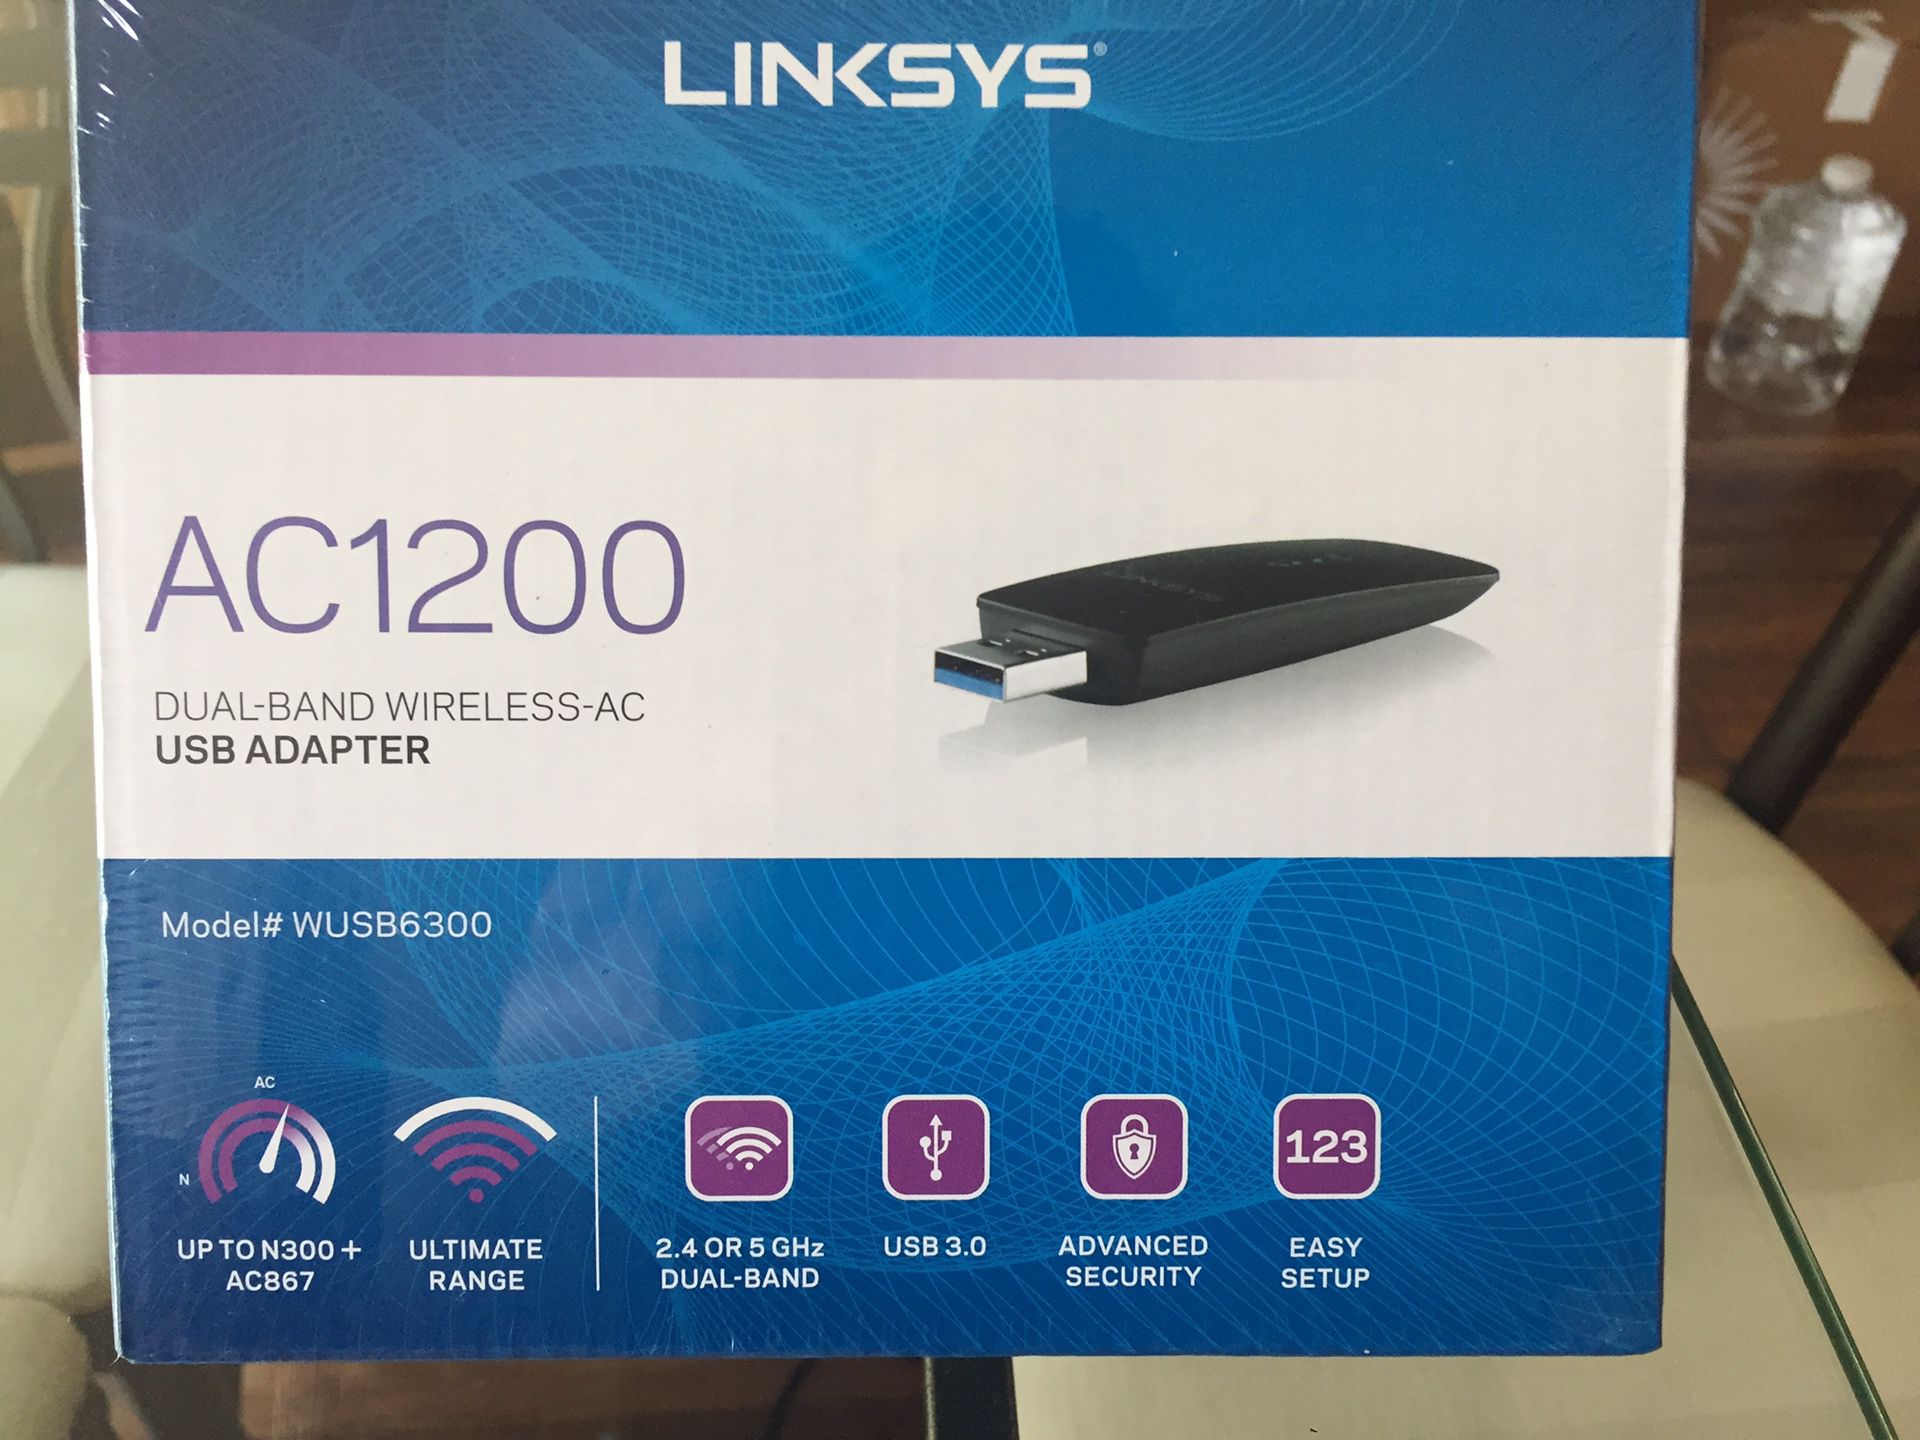 LINKSYS AC1200 USB ADAPTOR